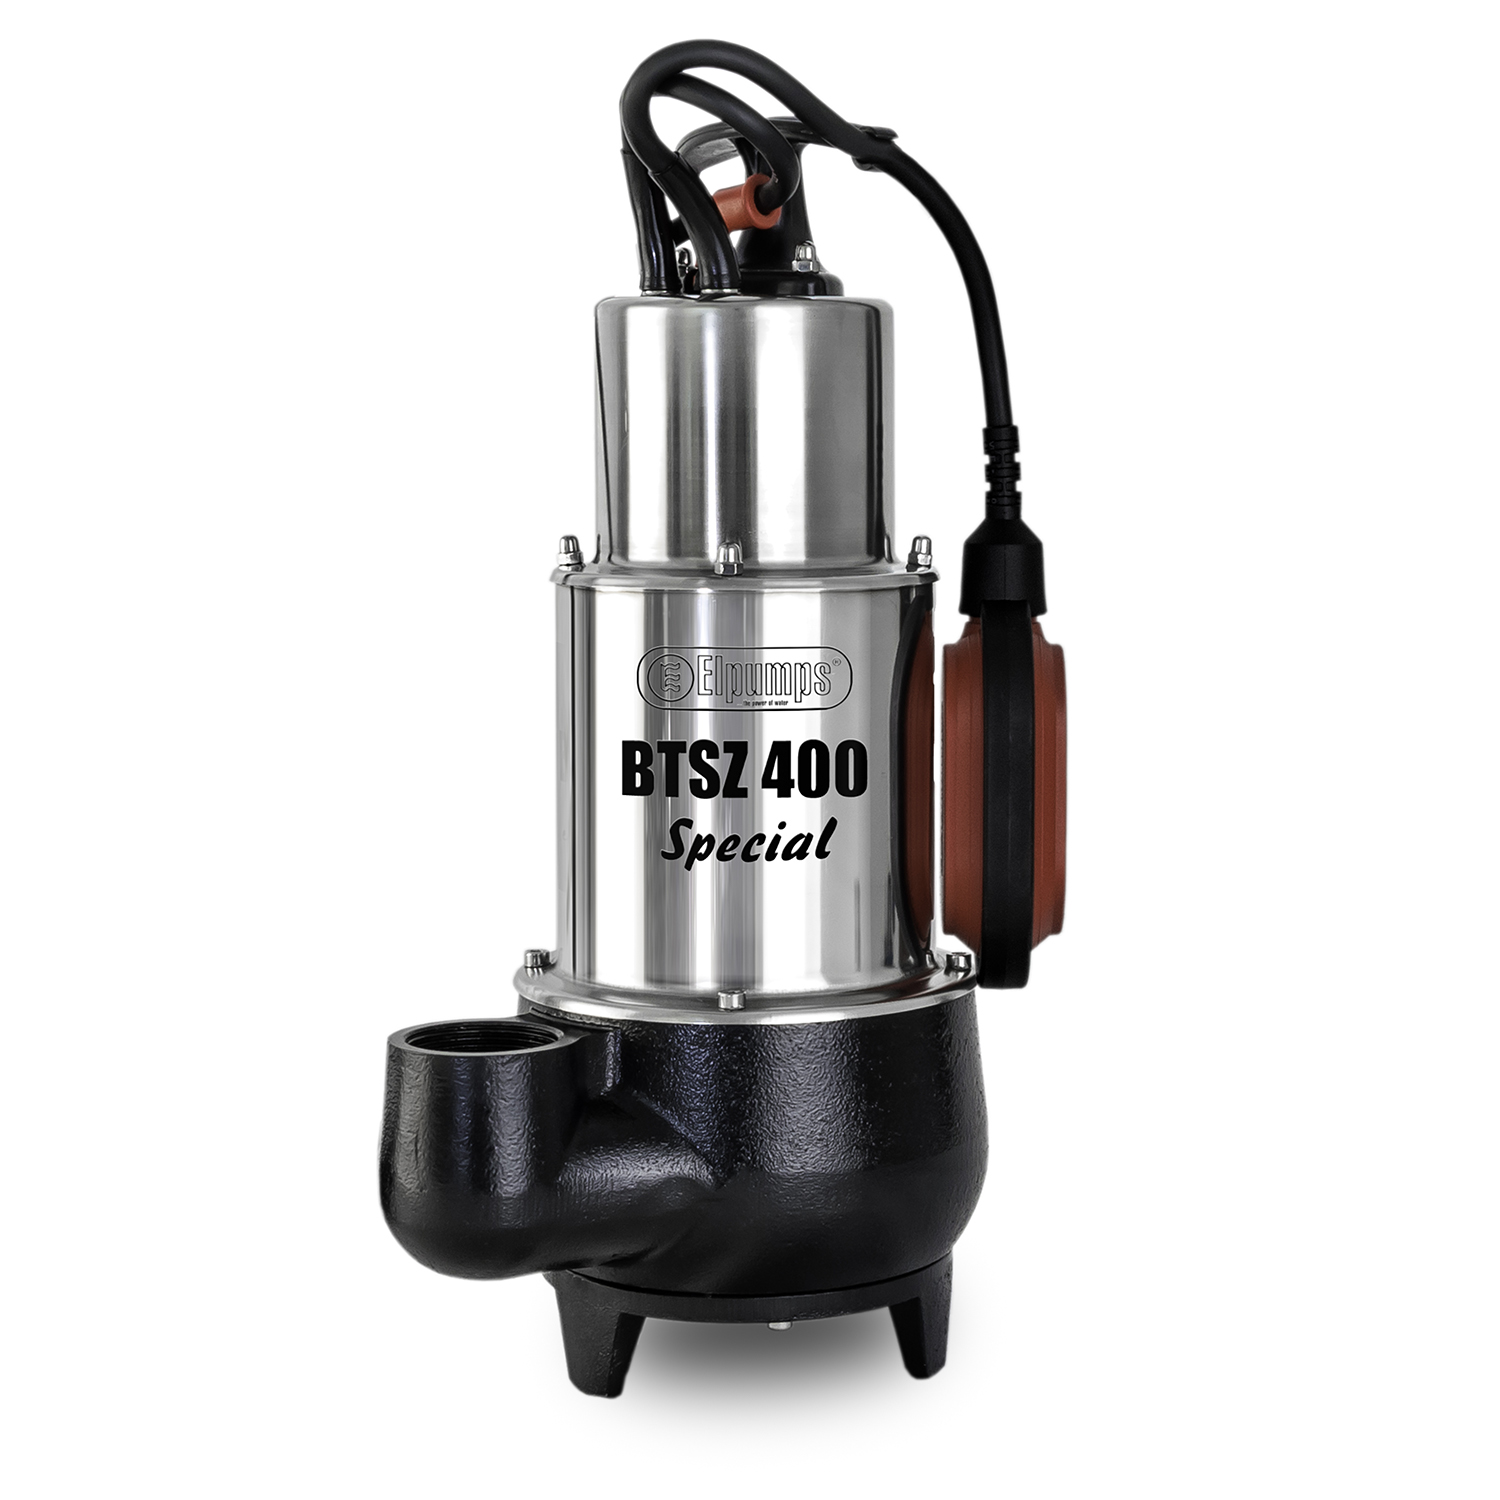 BTSZ 400 SPECIAL Free-flow (Vortex) submersible pumps for sewage